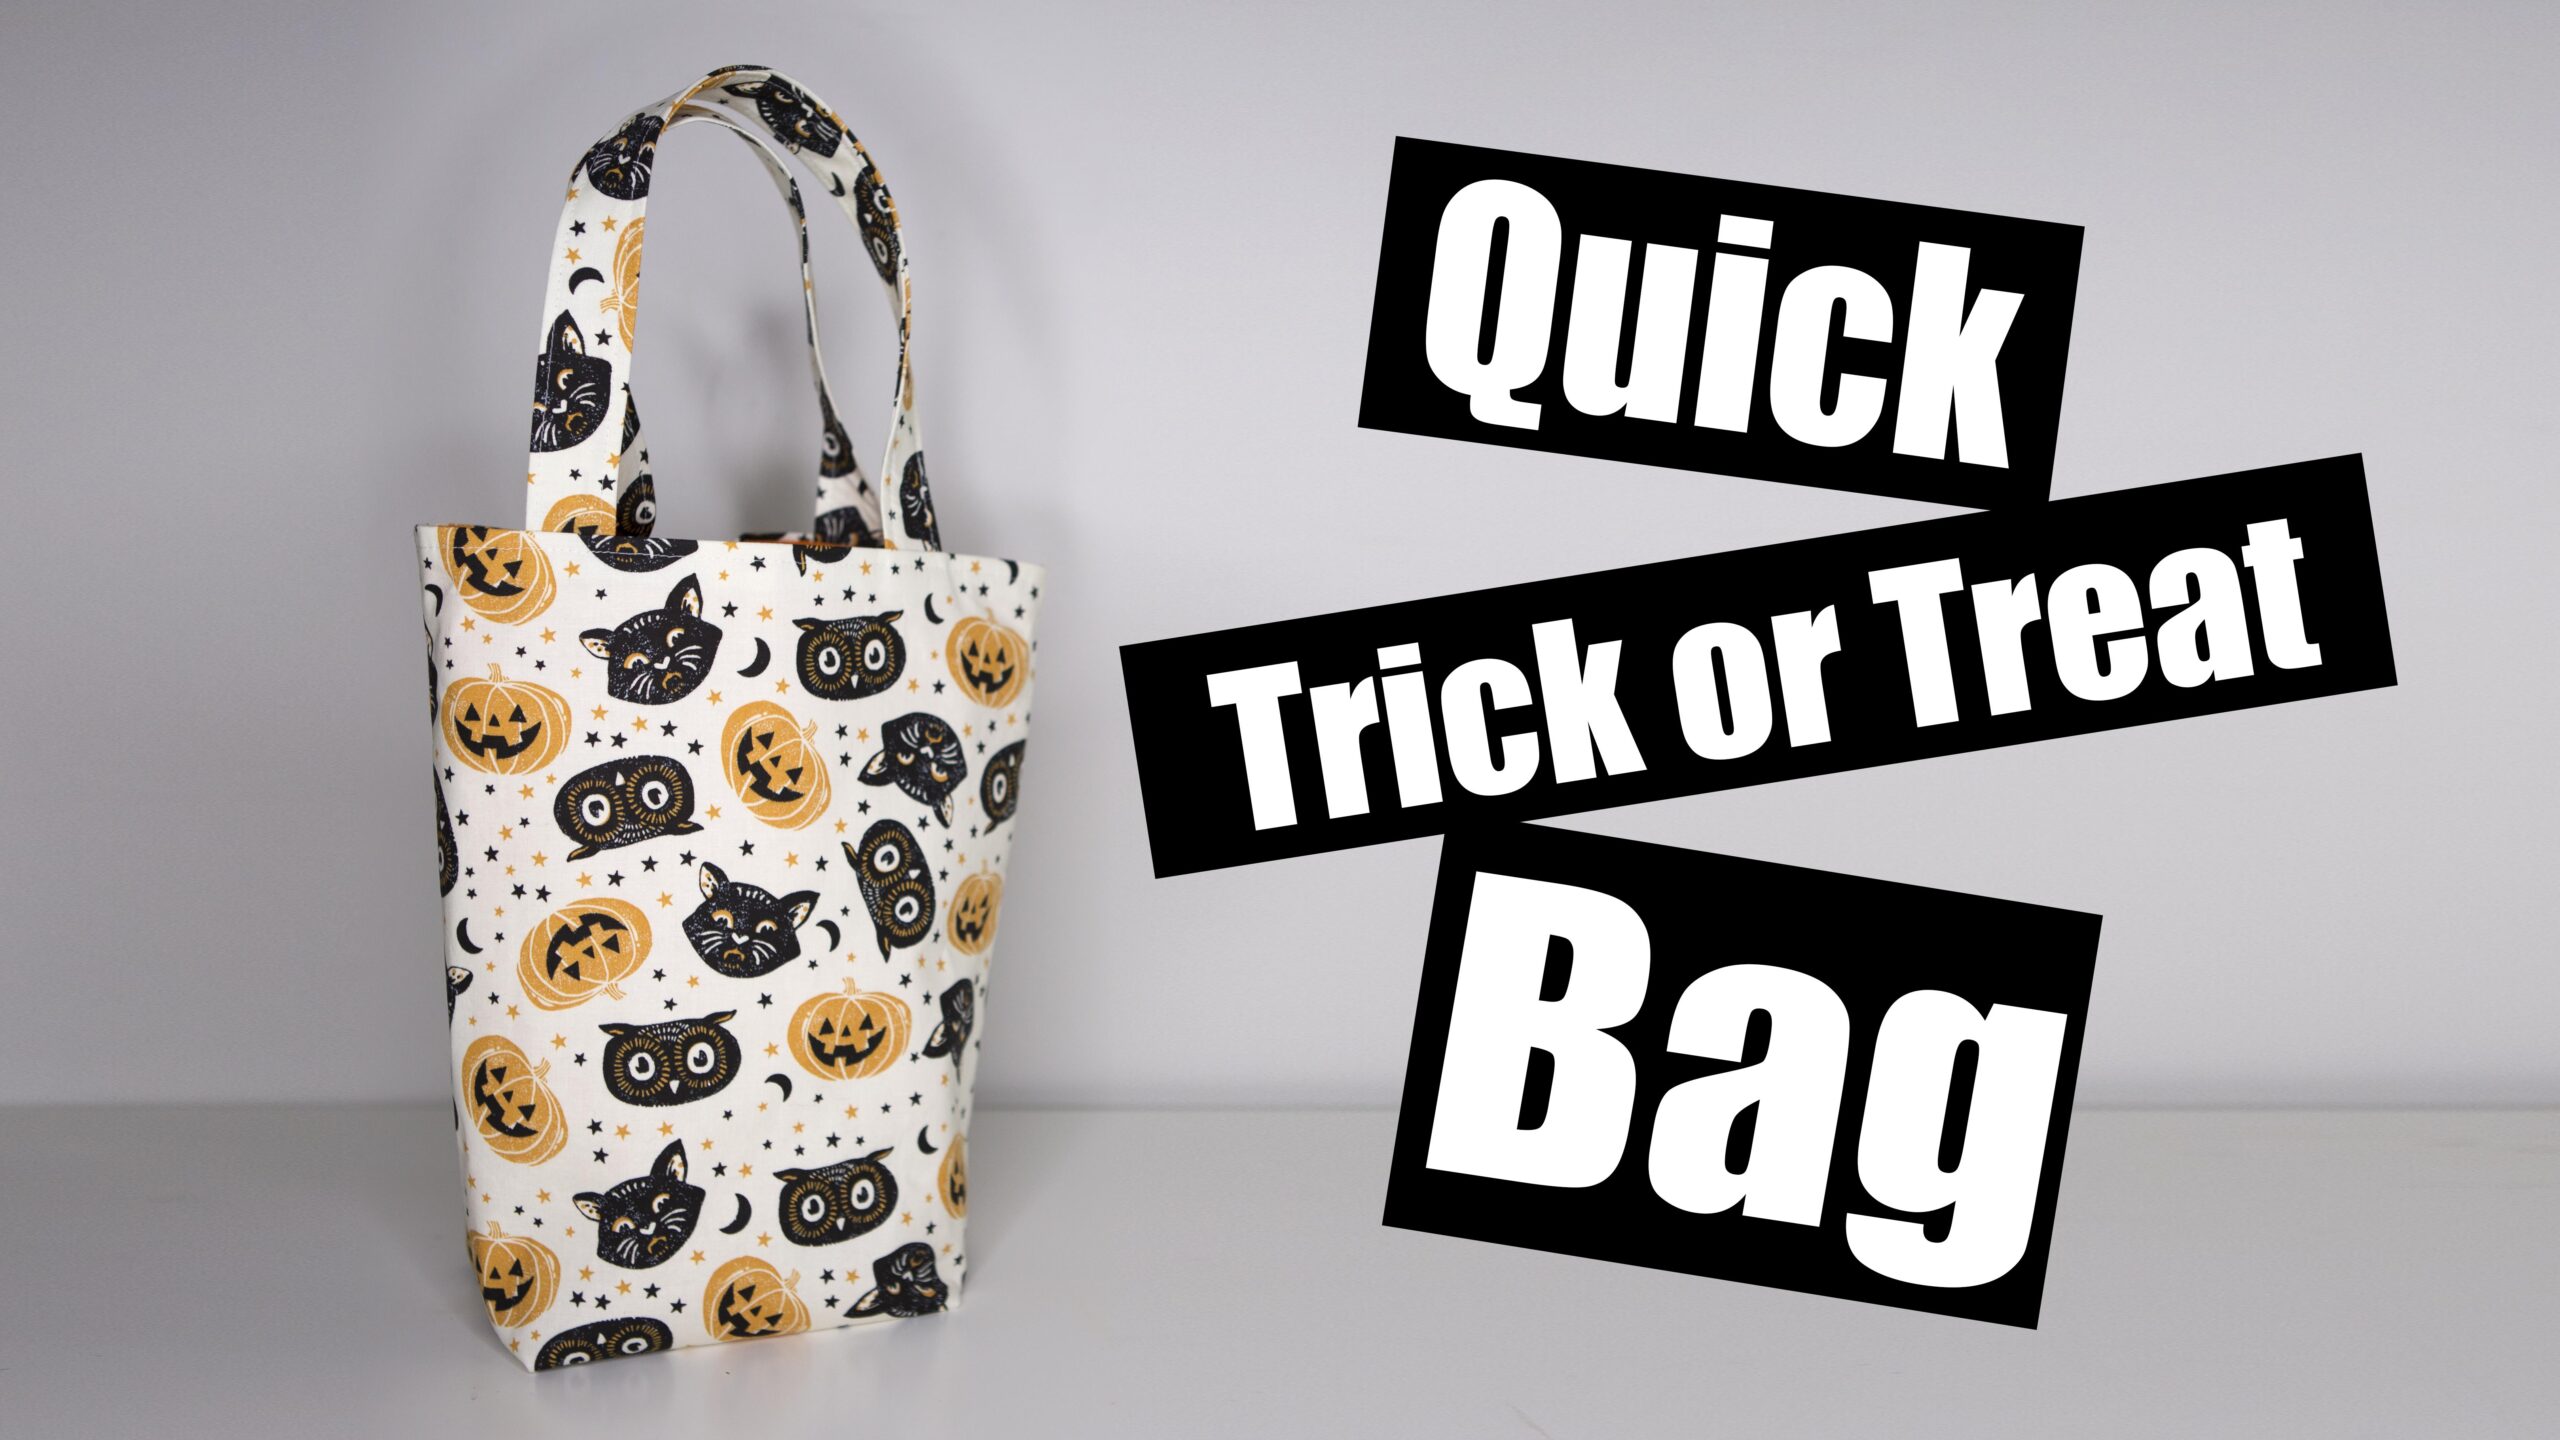 Quick trick or treat bag